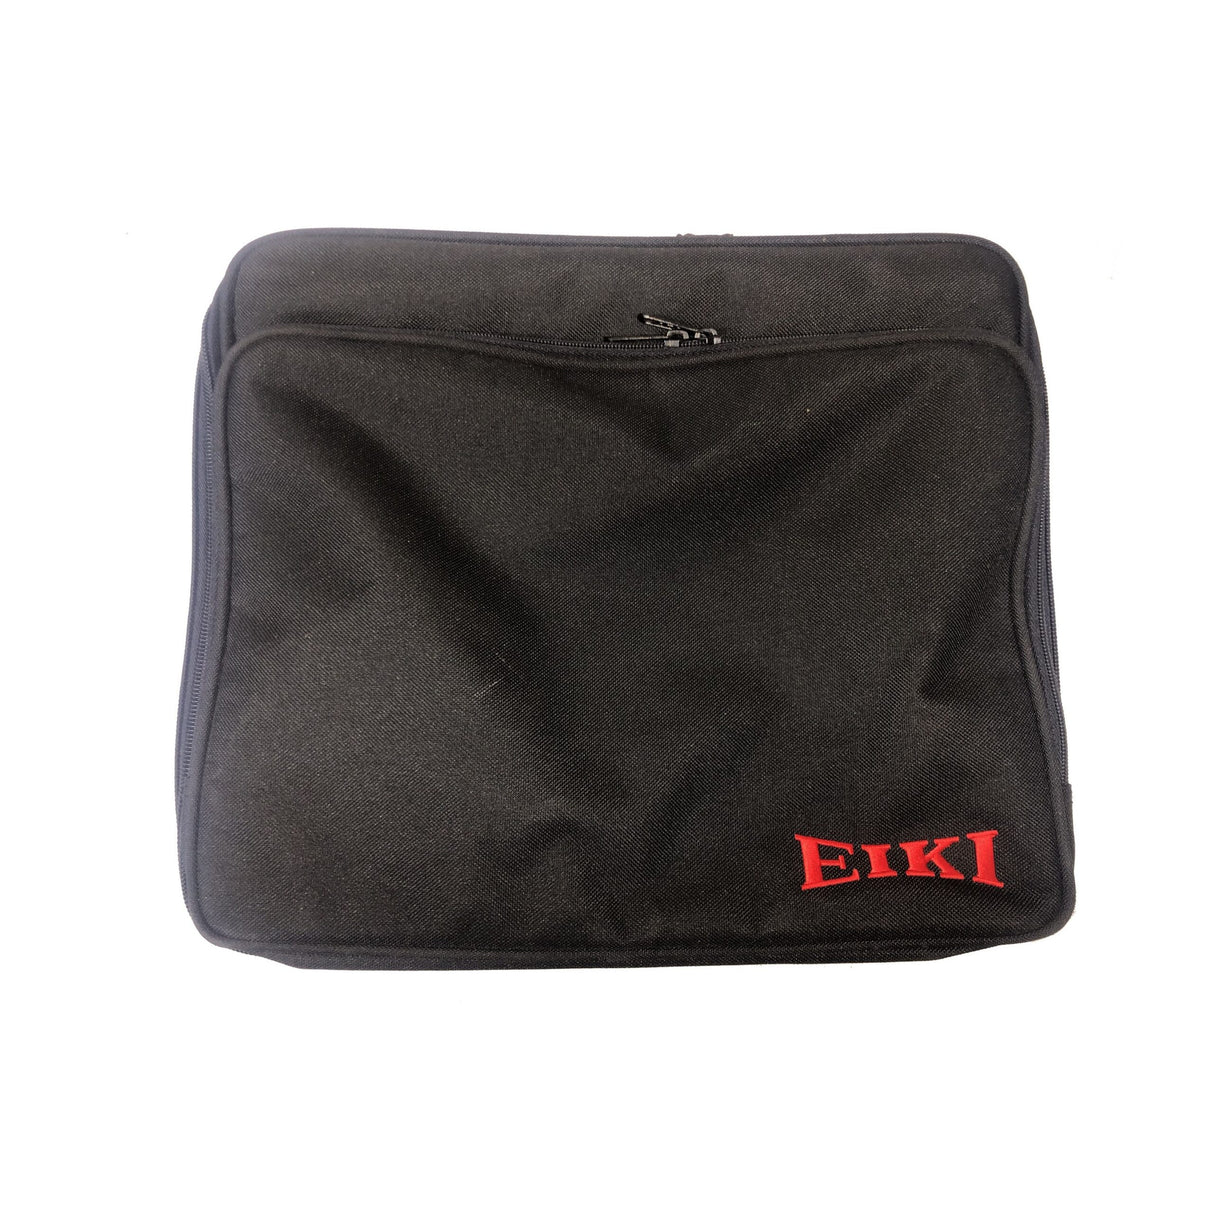 Eiki Projector Carry Bag for EK-103X, EK-102X, EK-101X, EK-100W, EK-402UA, EK-401WA, LC-WB42NA, LC-WNB3000N, LC-XB43N